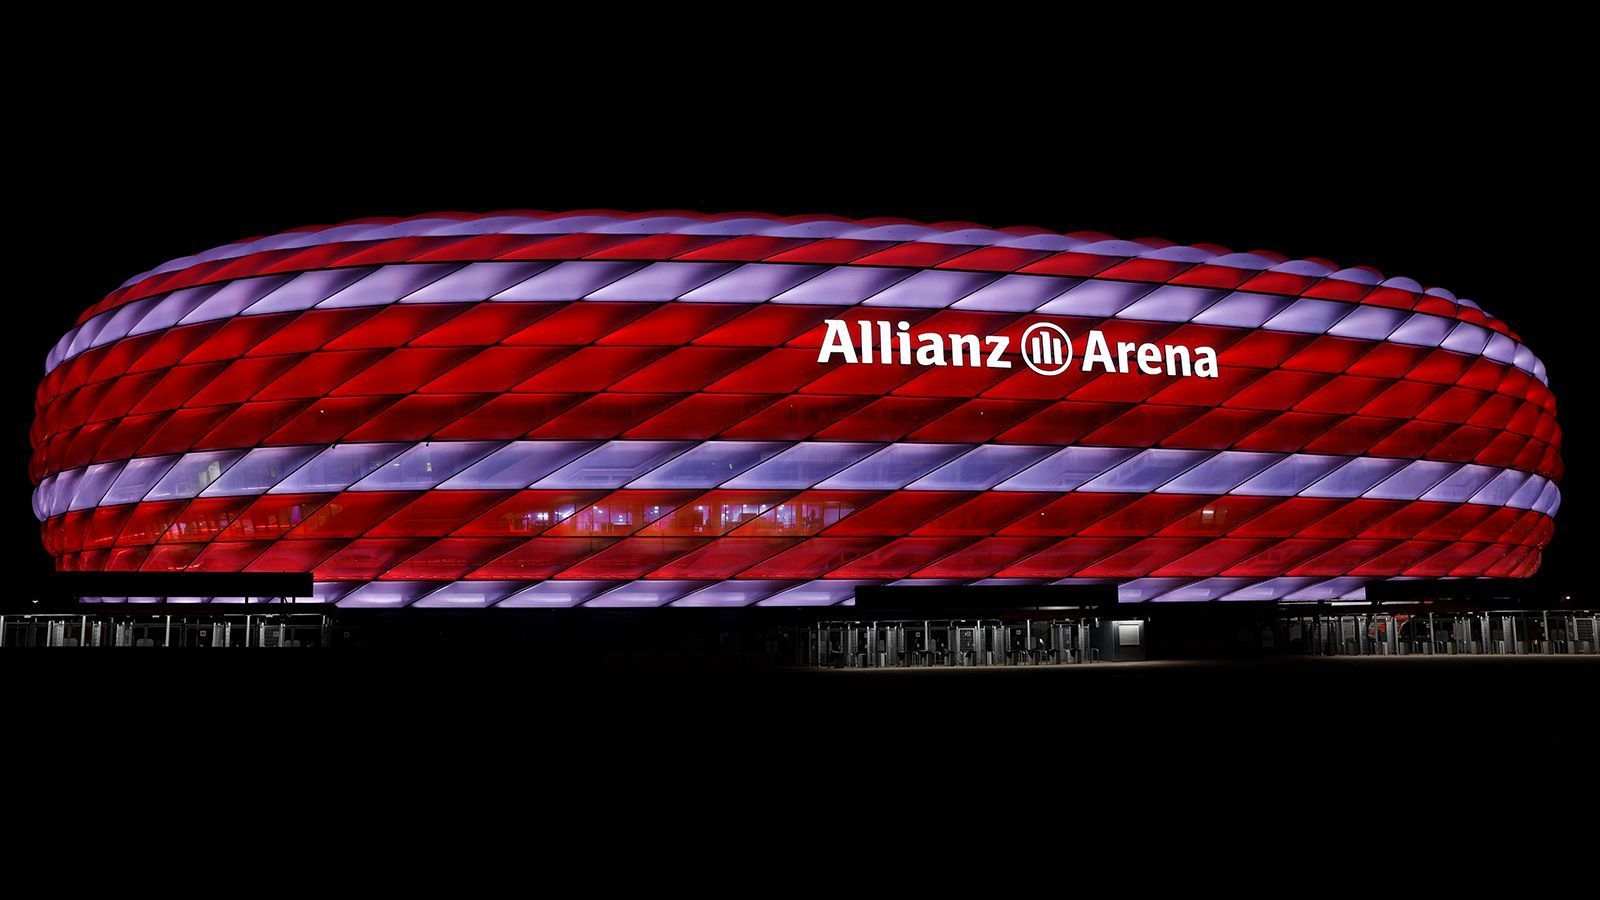 
                <strong>FC Bayern München</strong><br>
                &#x2022; Aktueller Name: Allianz Arena<br>&#x2022; Eröffnung des Stadions: Mai 2005<br>&#x2022; Altes Stadion: Olympiastadion<br>
              